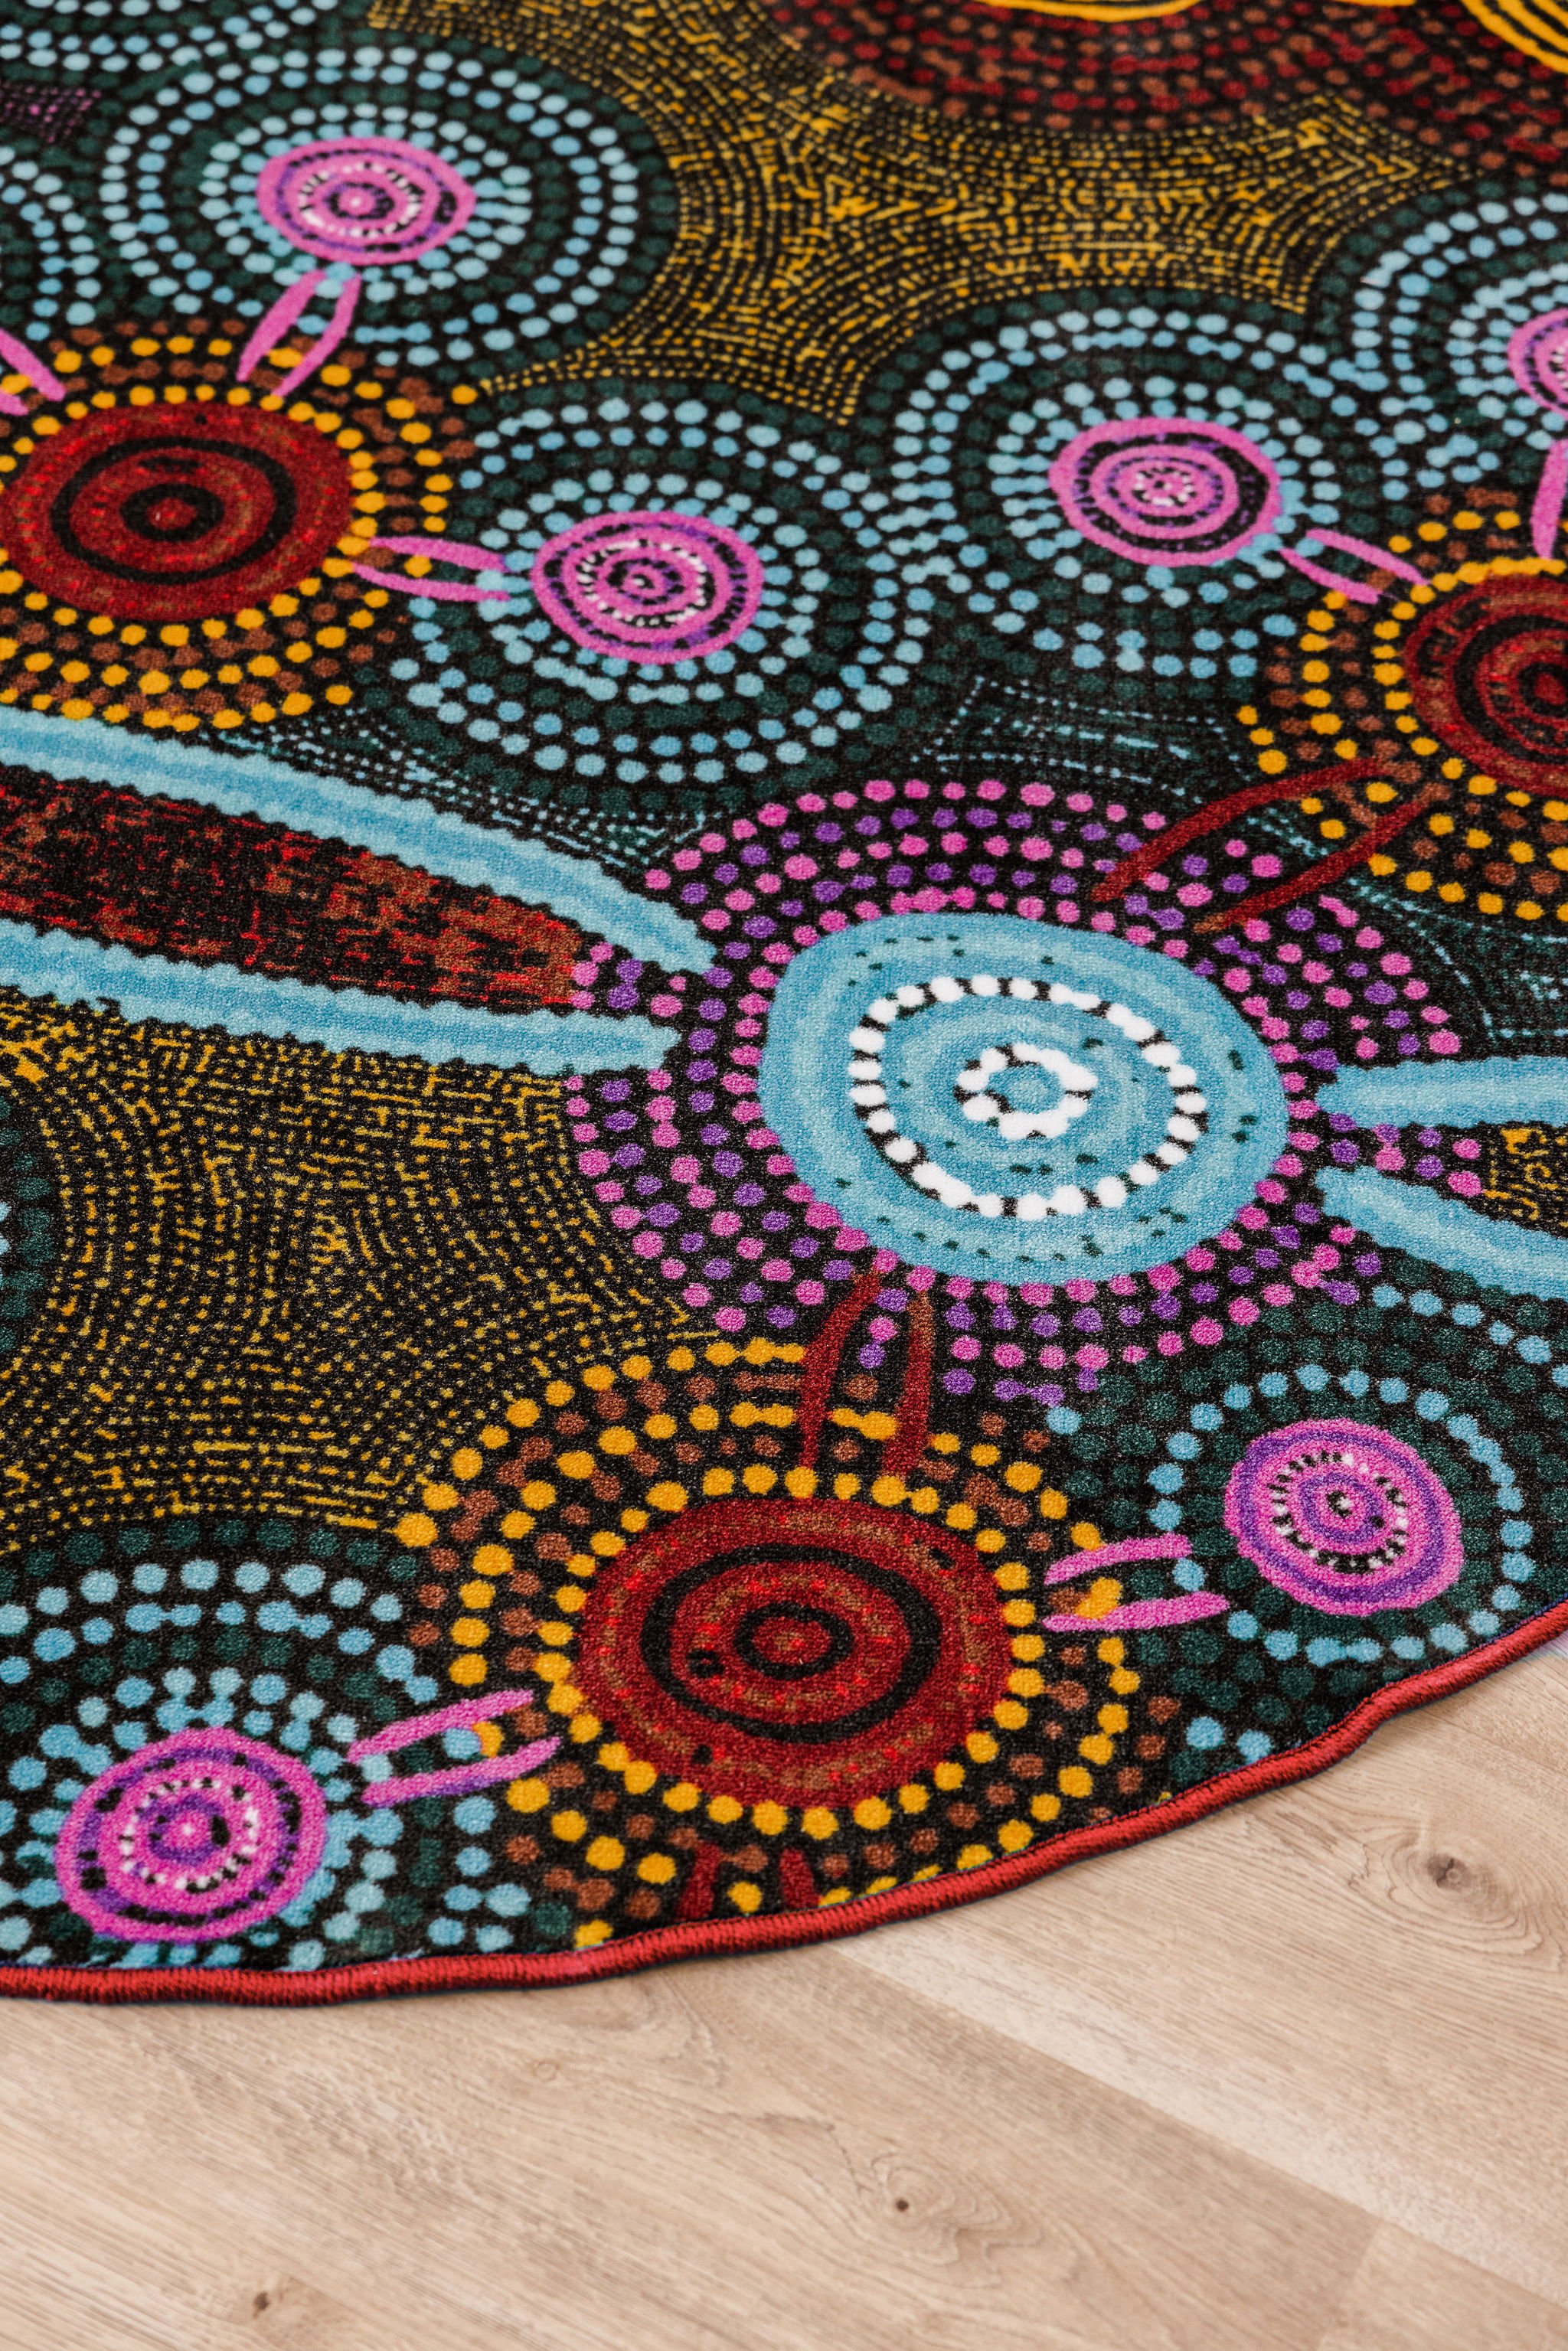 Tanika-Blair-Photography-Emro-Designs-Daycare-Aboriginal-Floor-Rugs-43.jpg